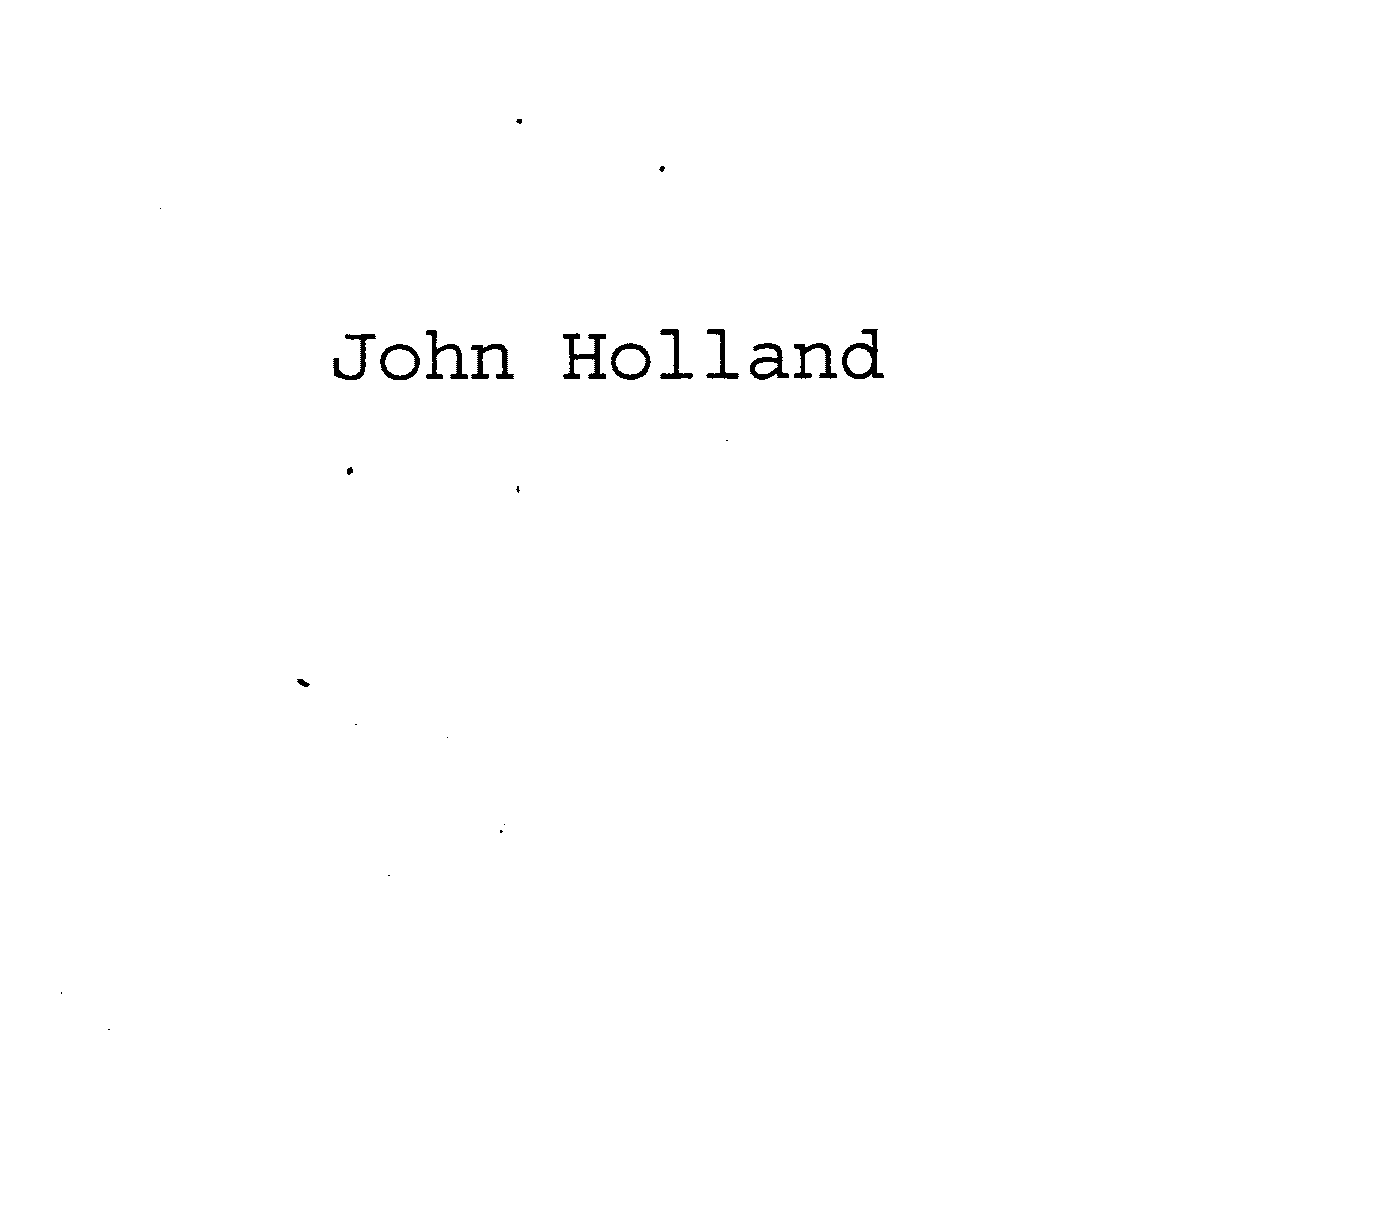  JOHN HOLLAND